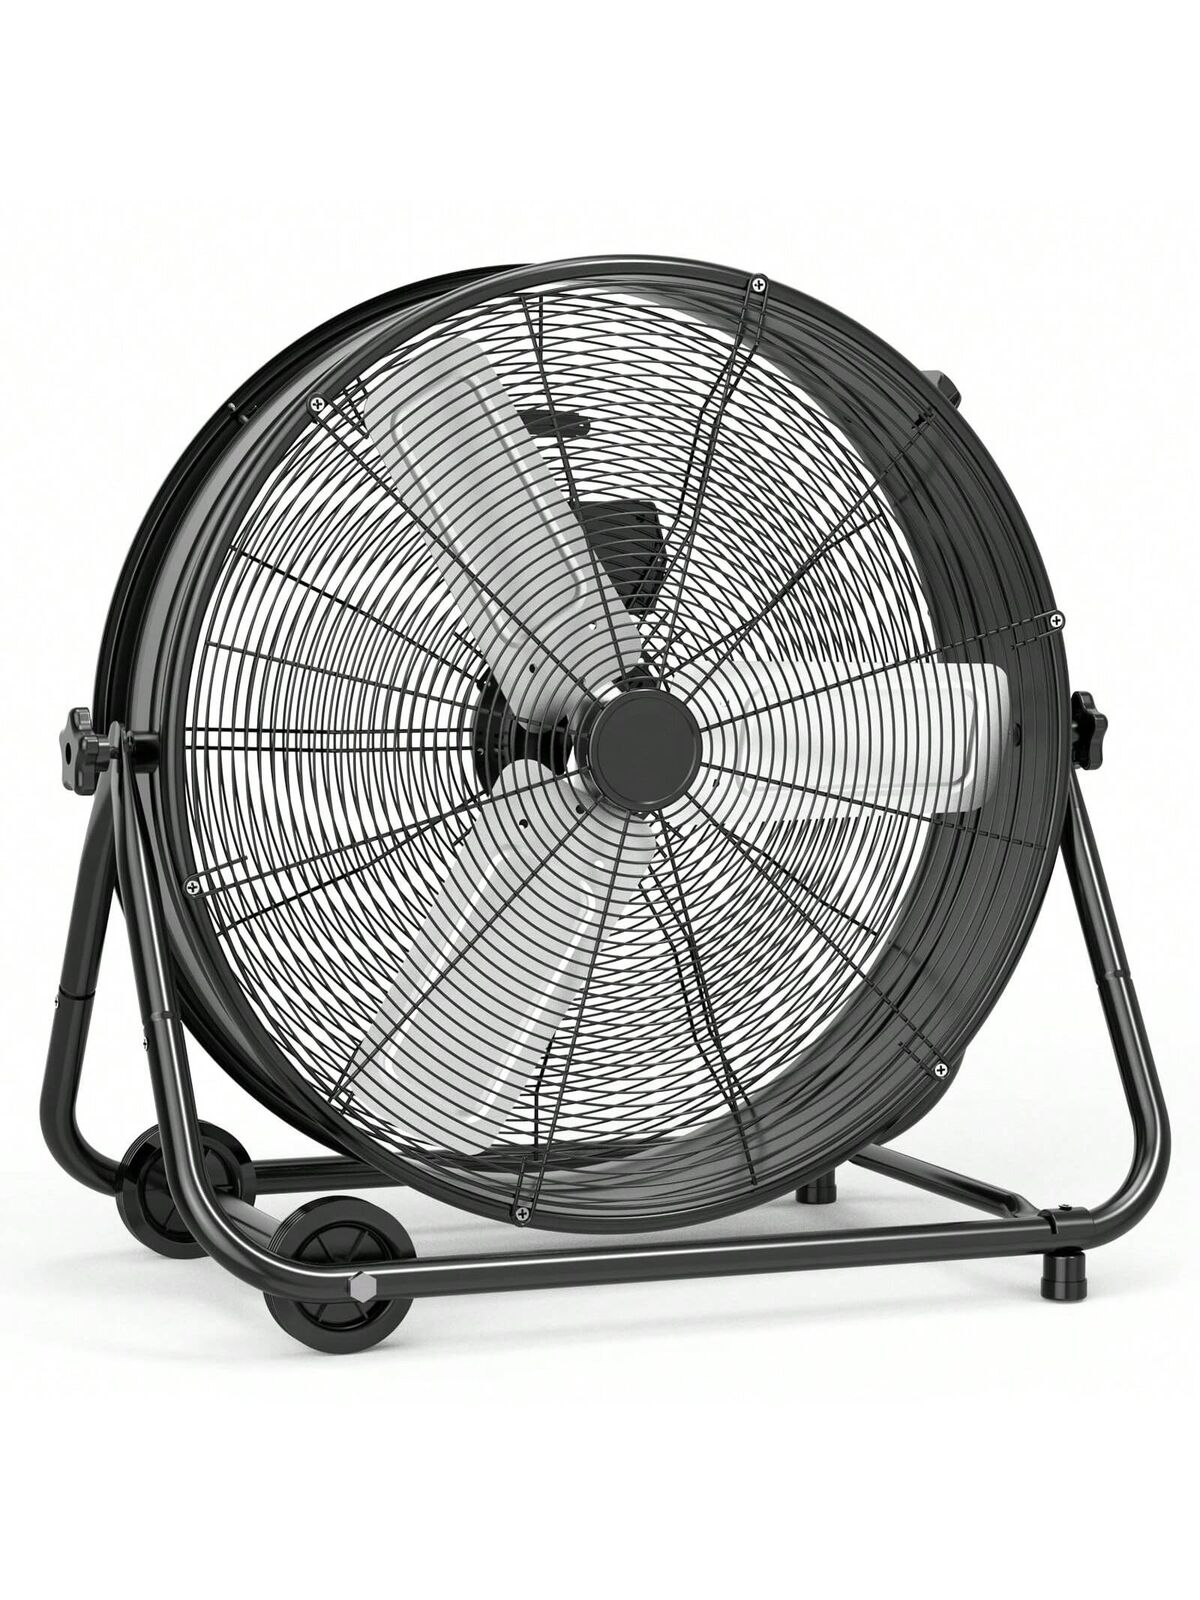 24 Inch Industrial Drum Fan For Garage,Shop,3 Speed Metal Air Circulator Fan